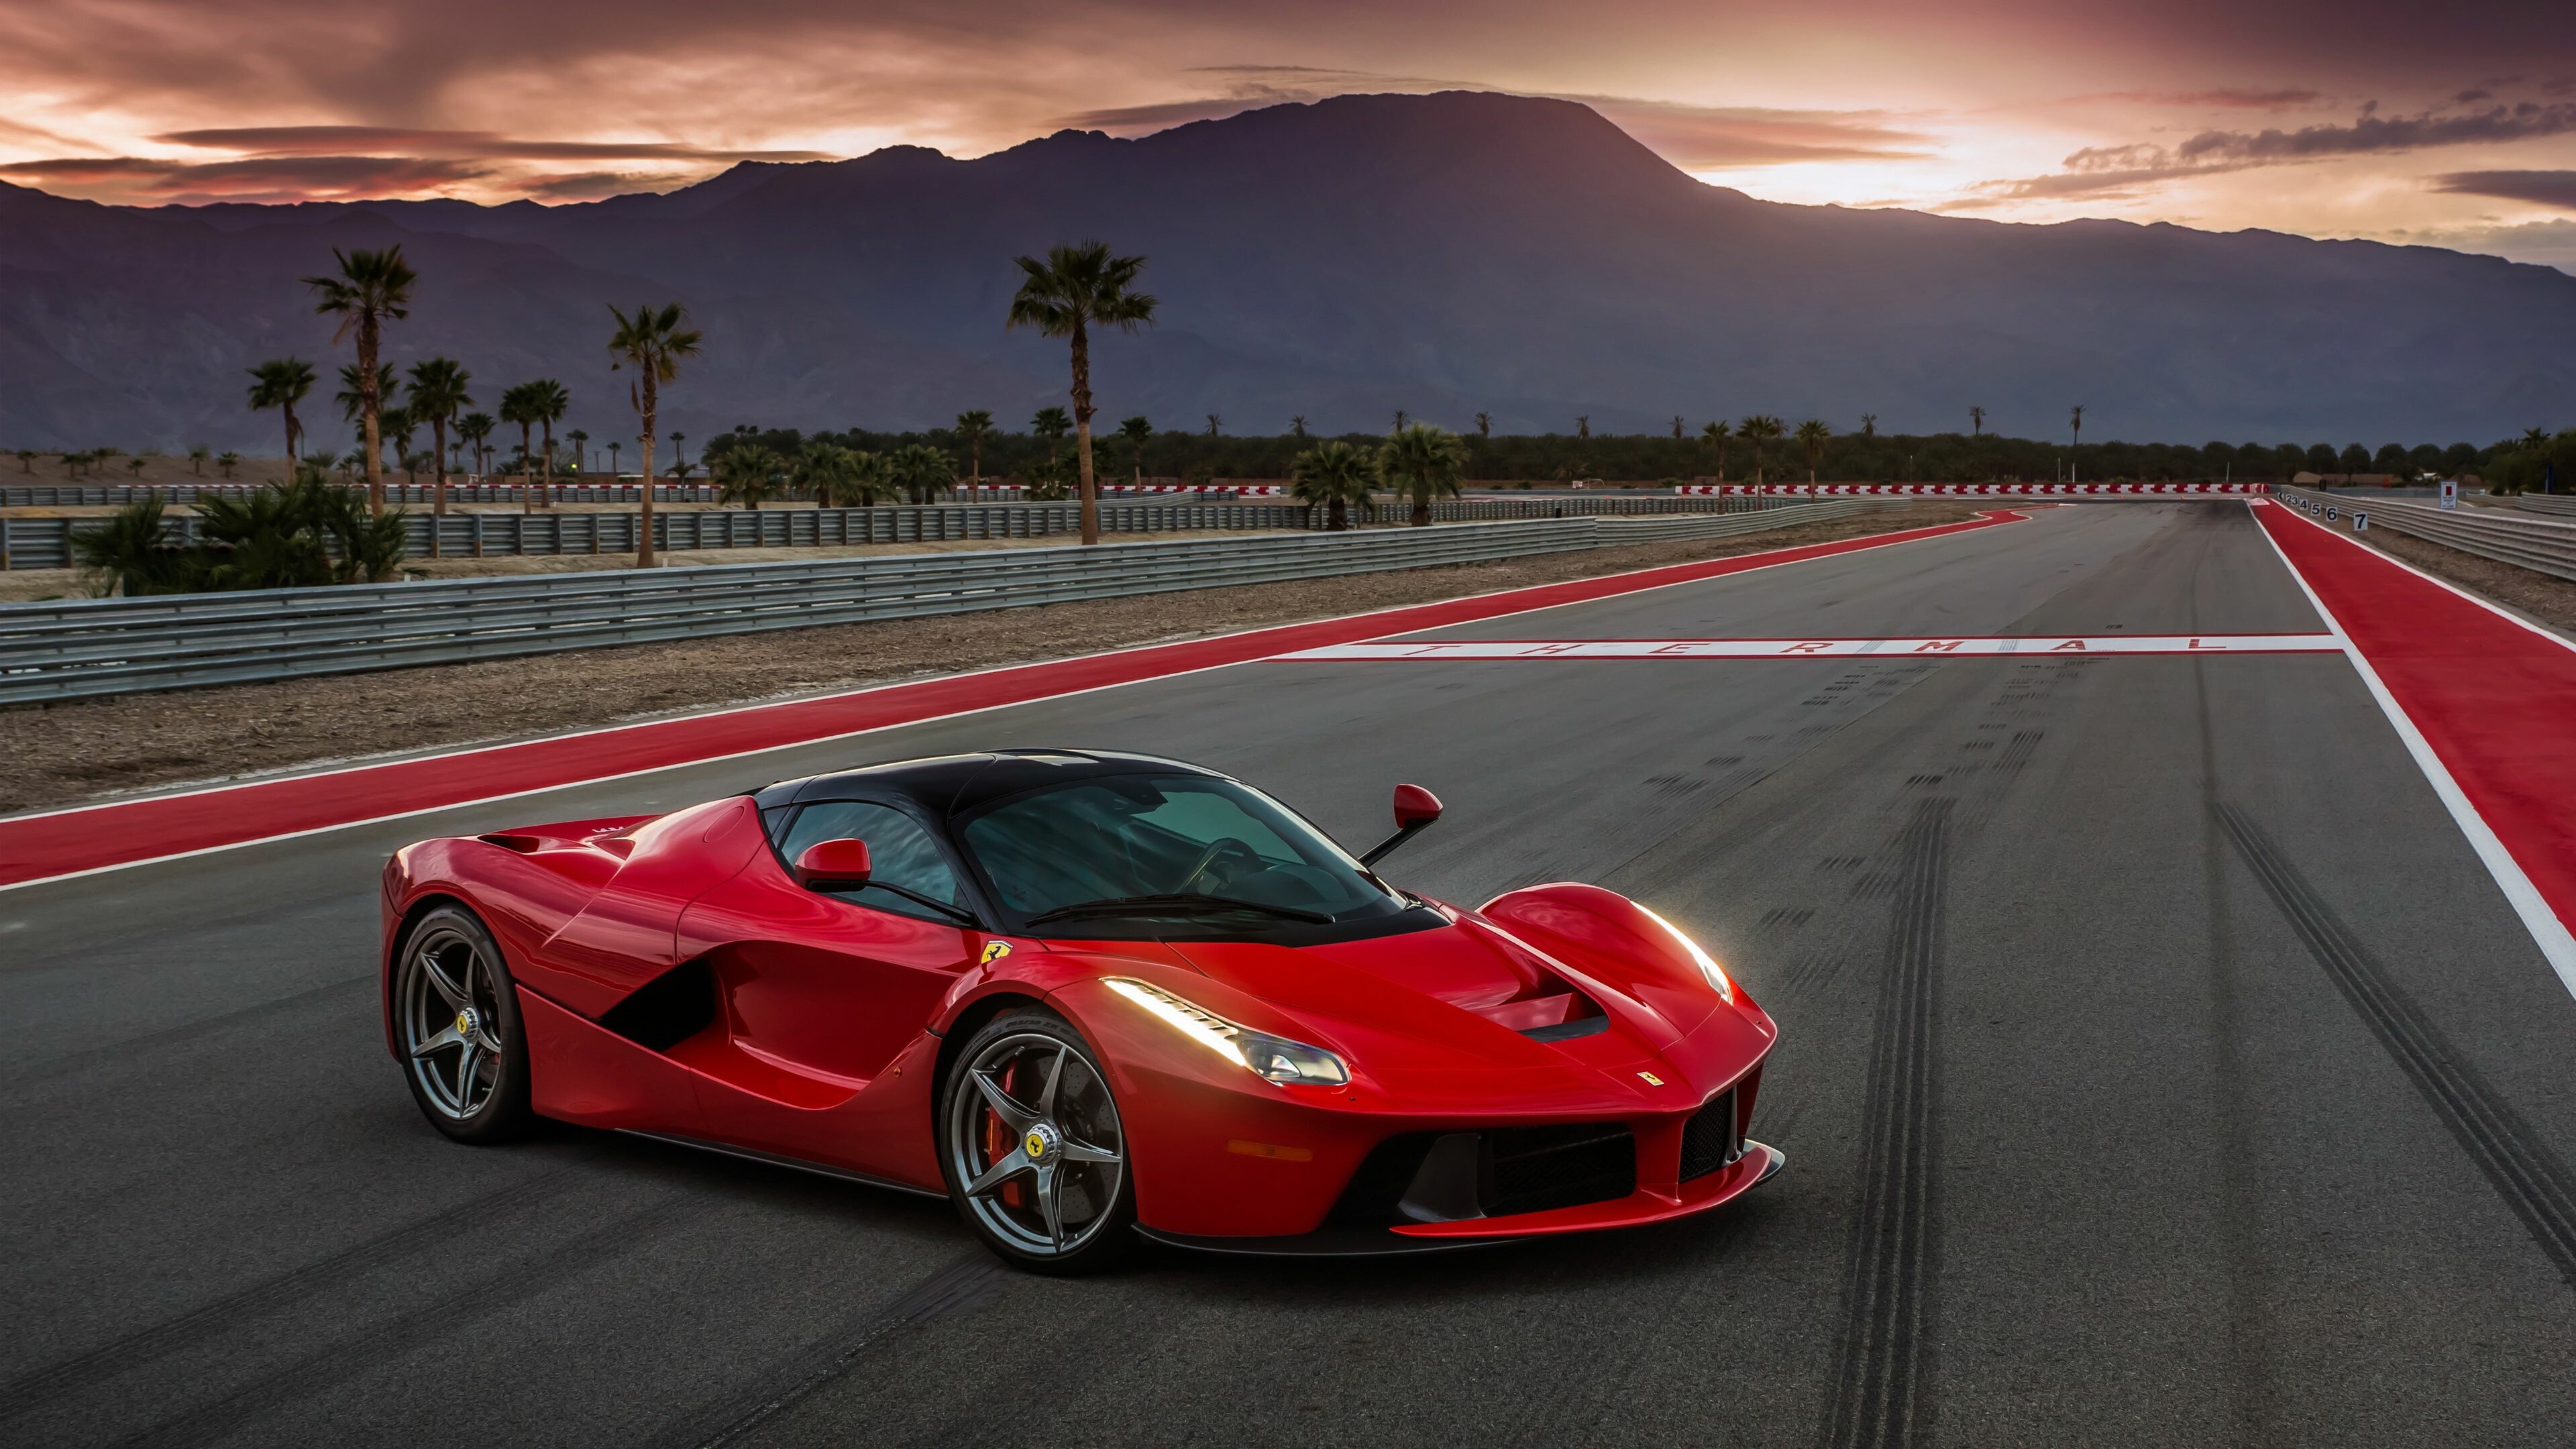 Ferrari: An Italian luxury sports car manufacturer based in Maranello, Italy. 3840x2160 4K Background.